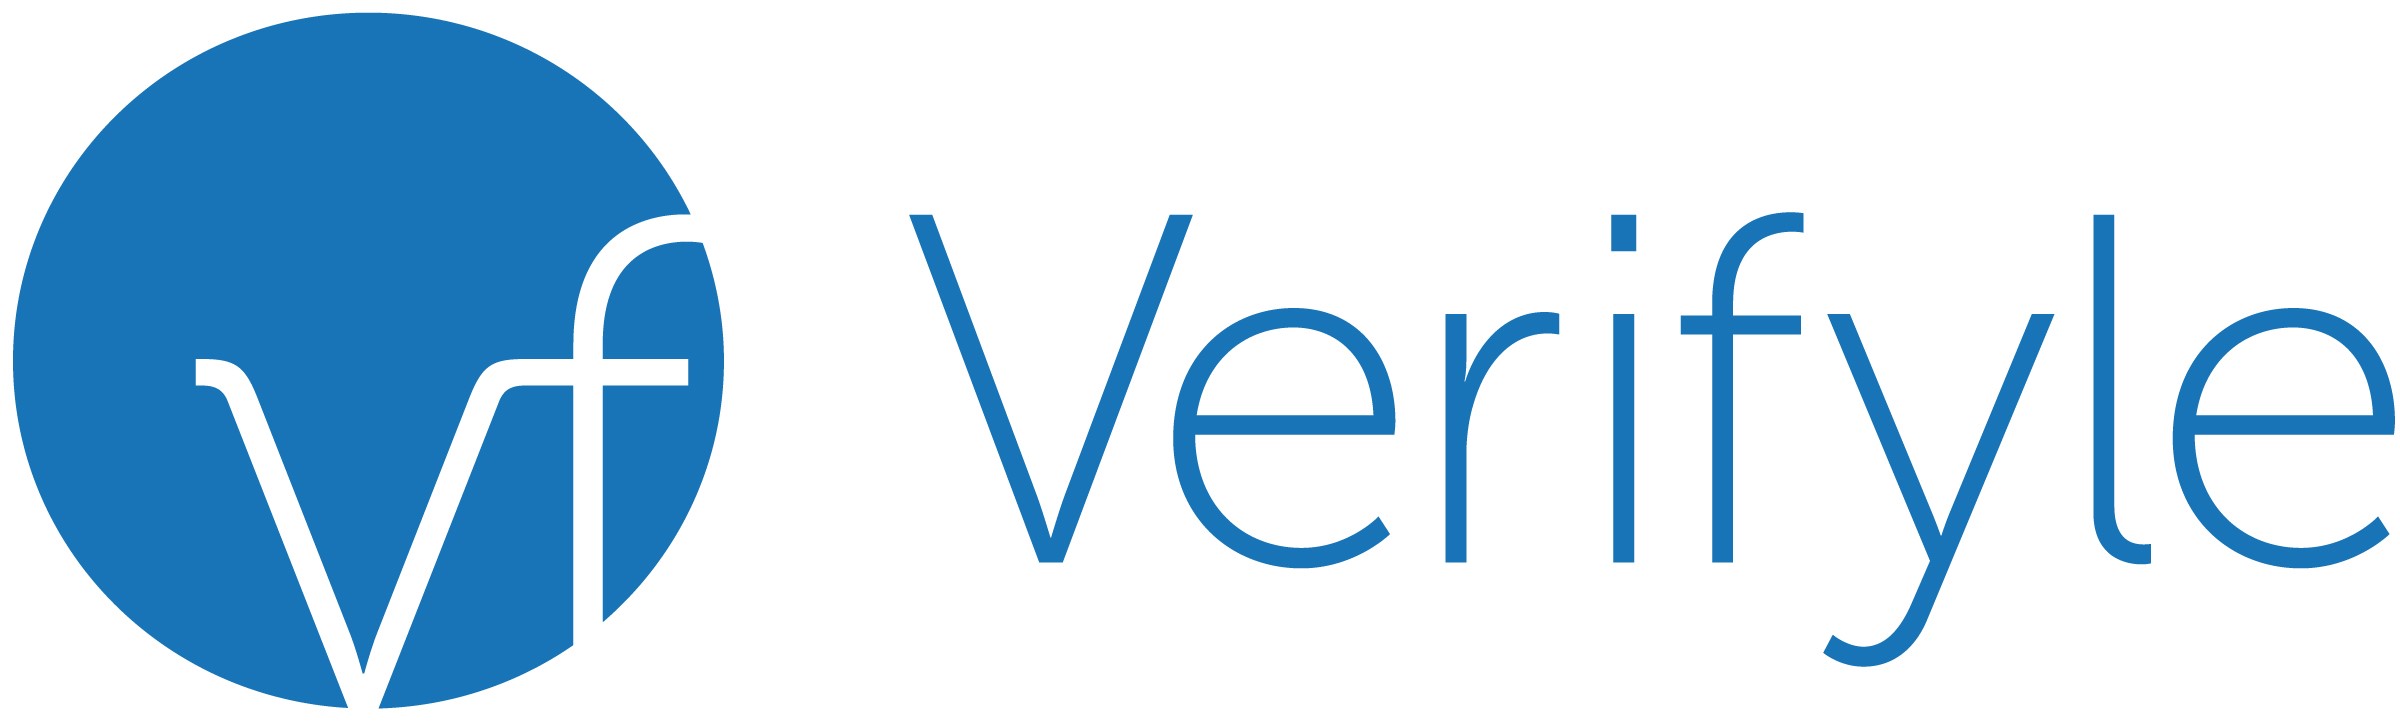 Verifyle New Logo Added-Aug0222